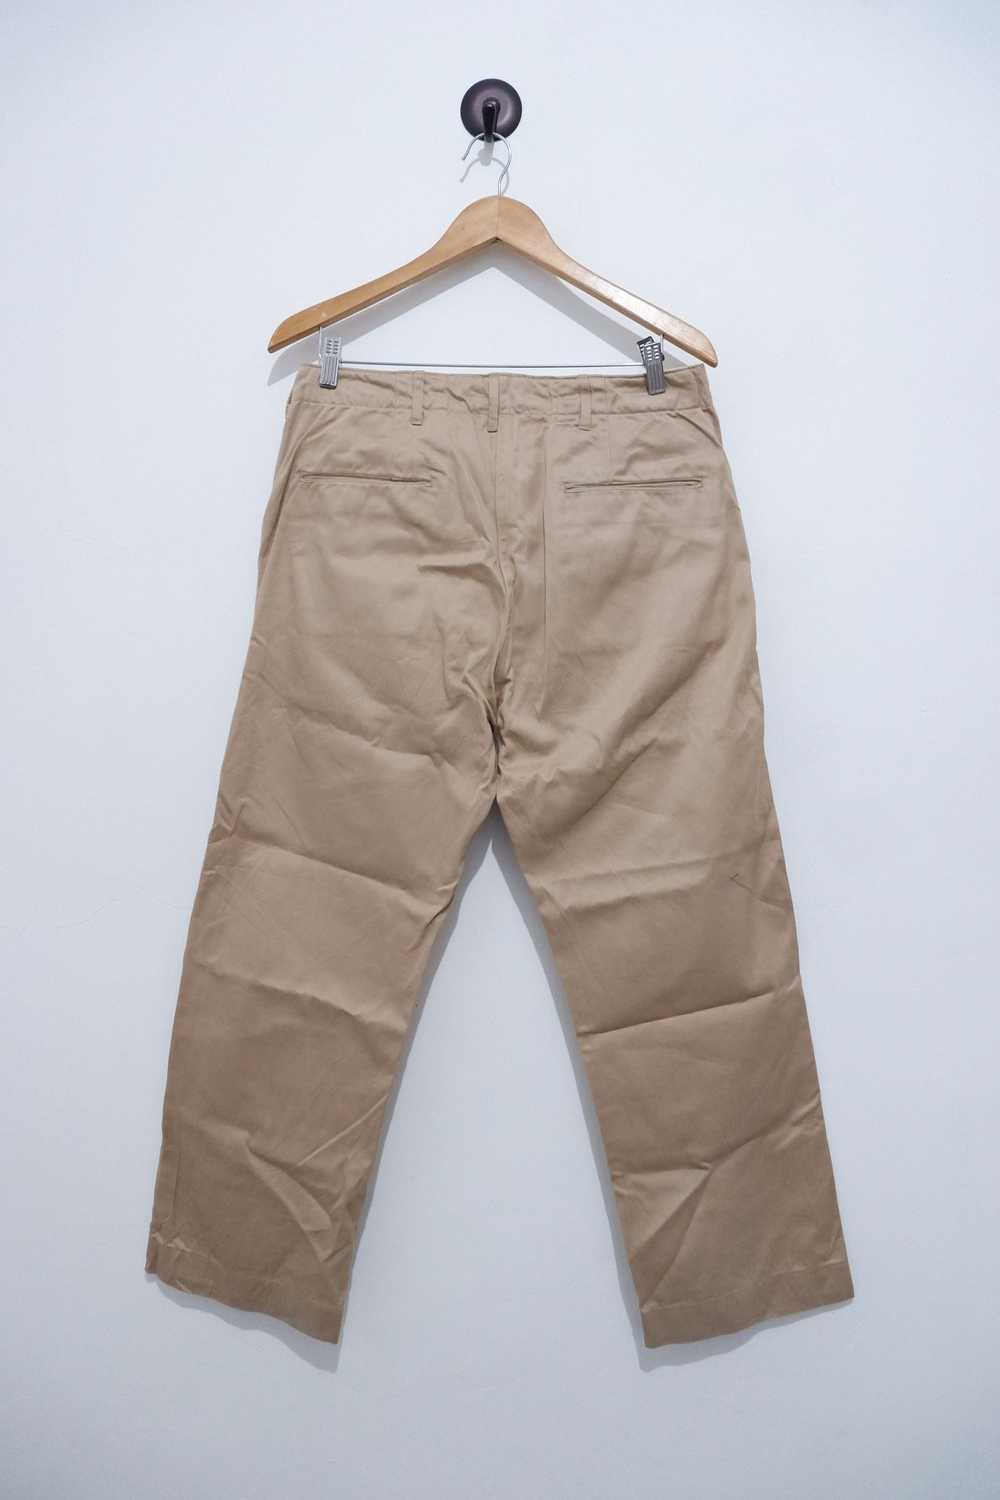 Buzz Rickson's Vintage Buzz Ricksons Cotton Pants - image 5